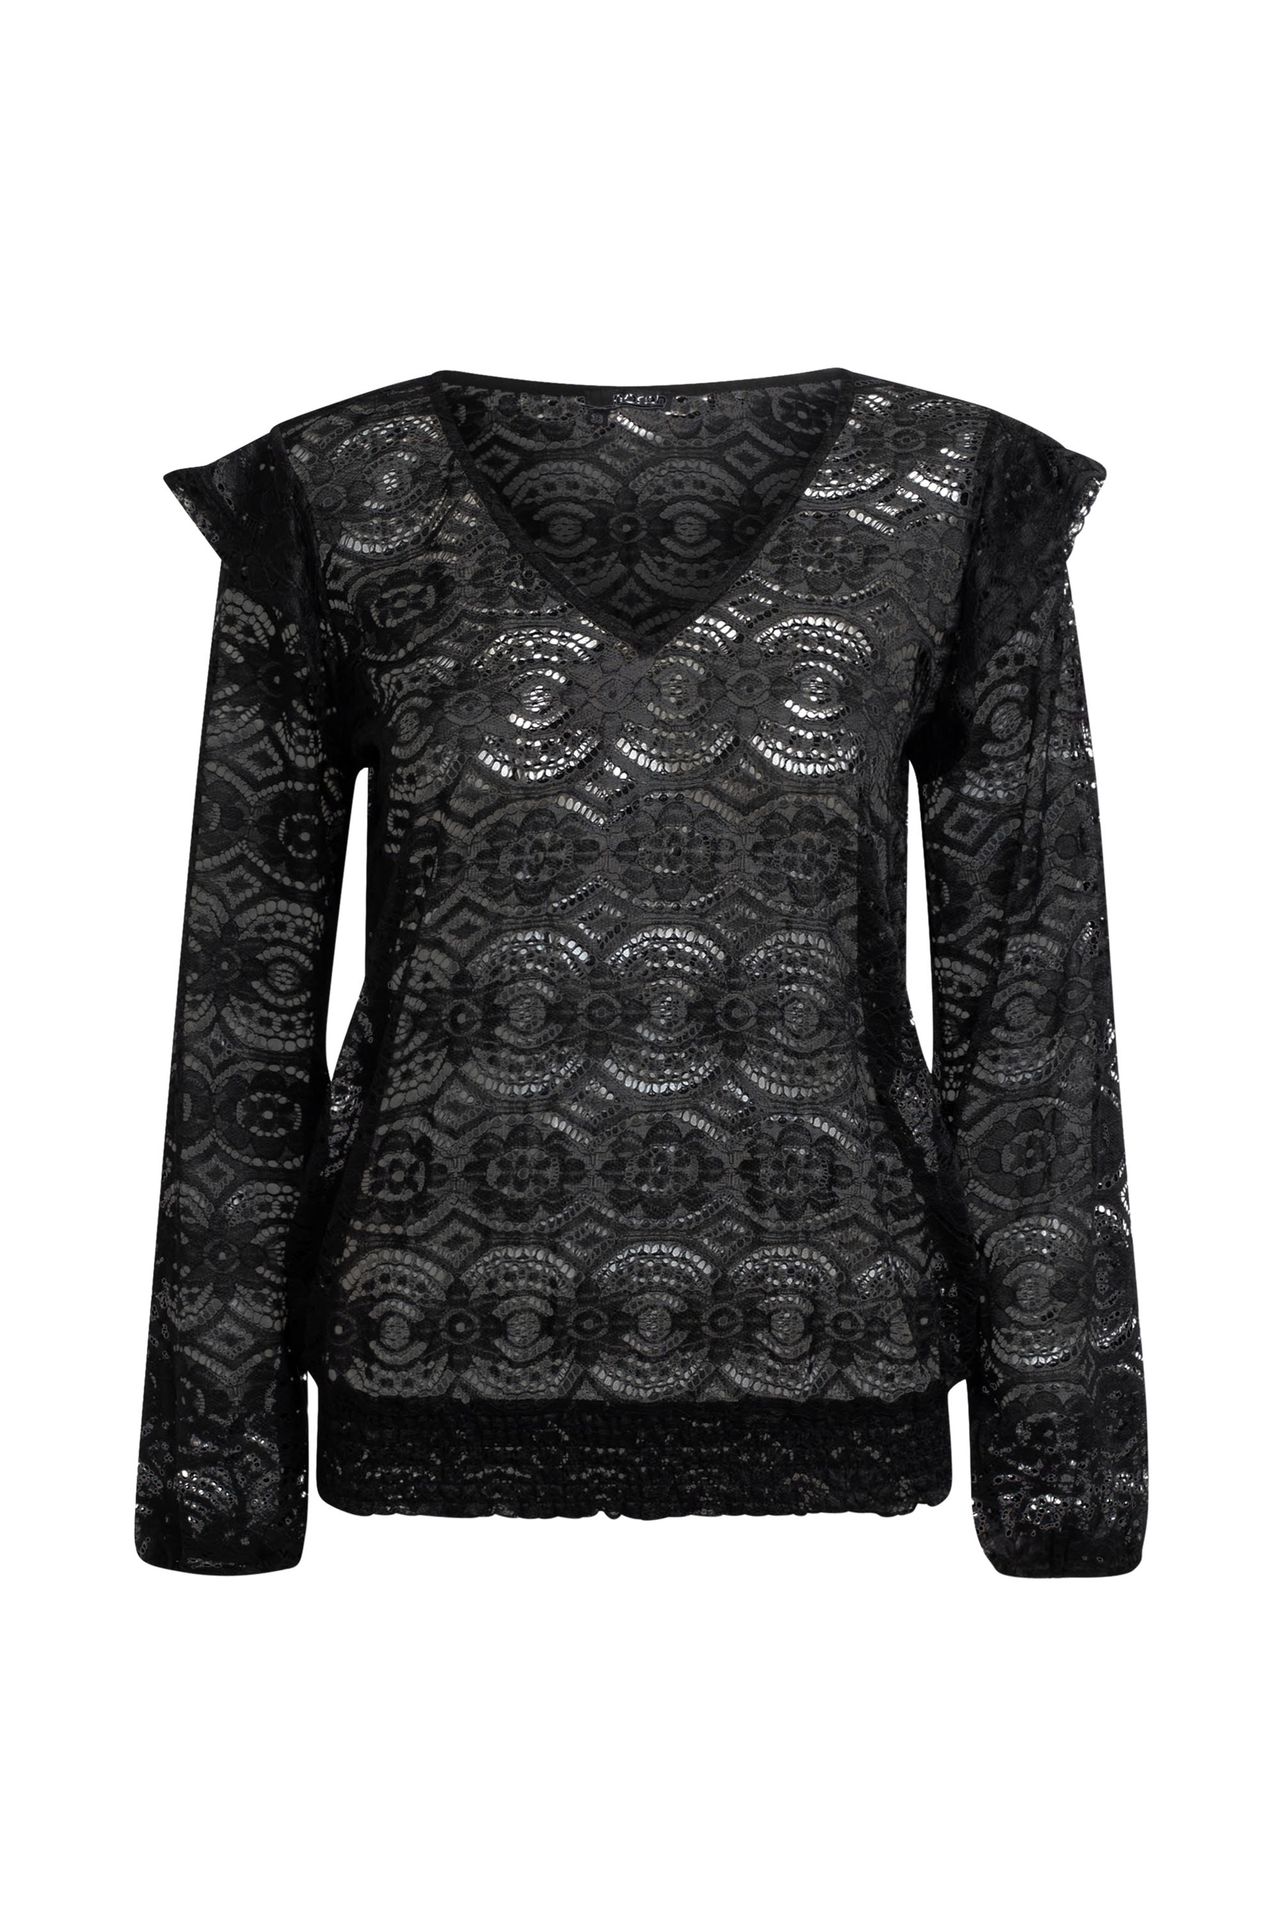 Norah Shirt - Feest collectie black 210989-001